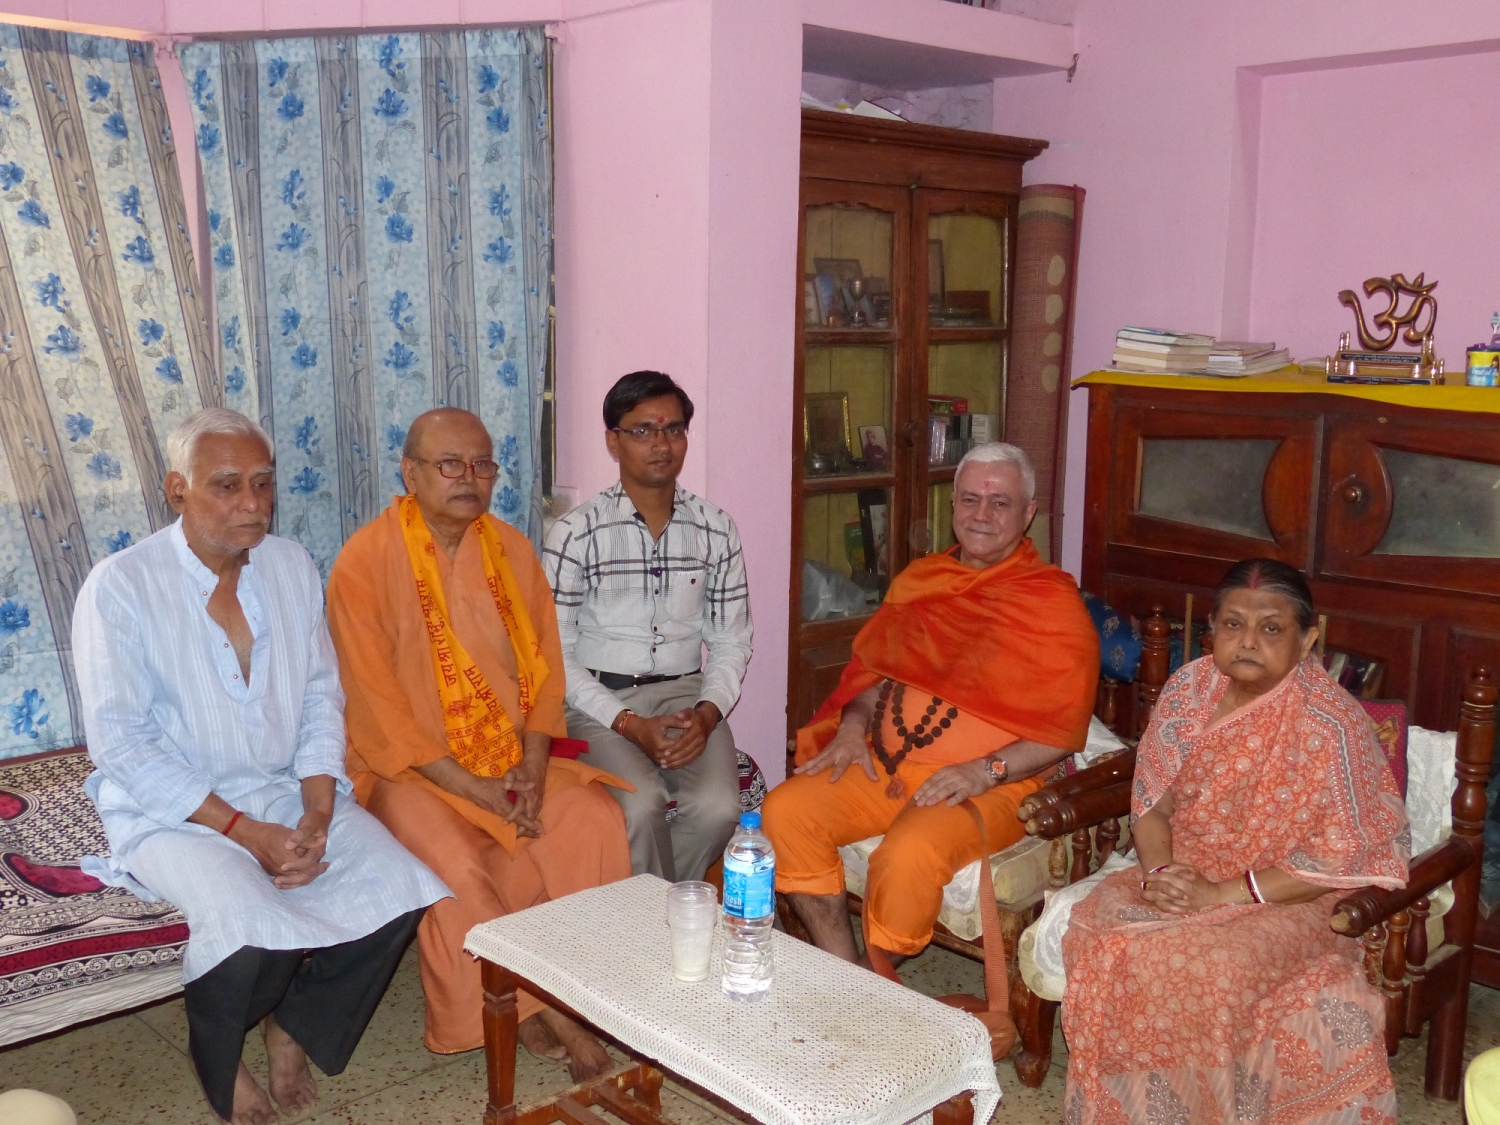 Meeting of H.H. Jagat Guru Amrta Sūryānanda Mahā Rāja with Svámin Malgalteertam - Dehogar, India - 2016, May